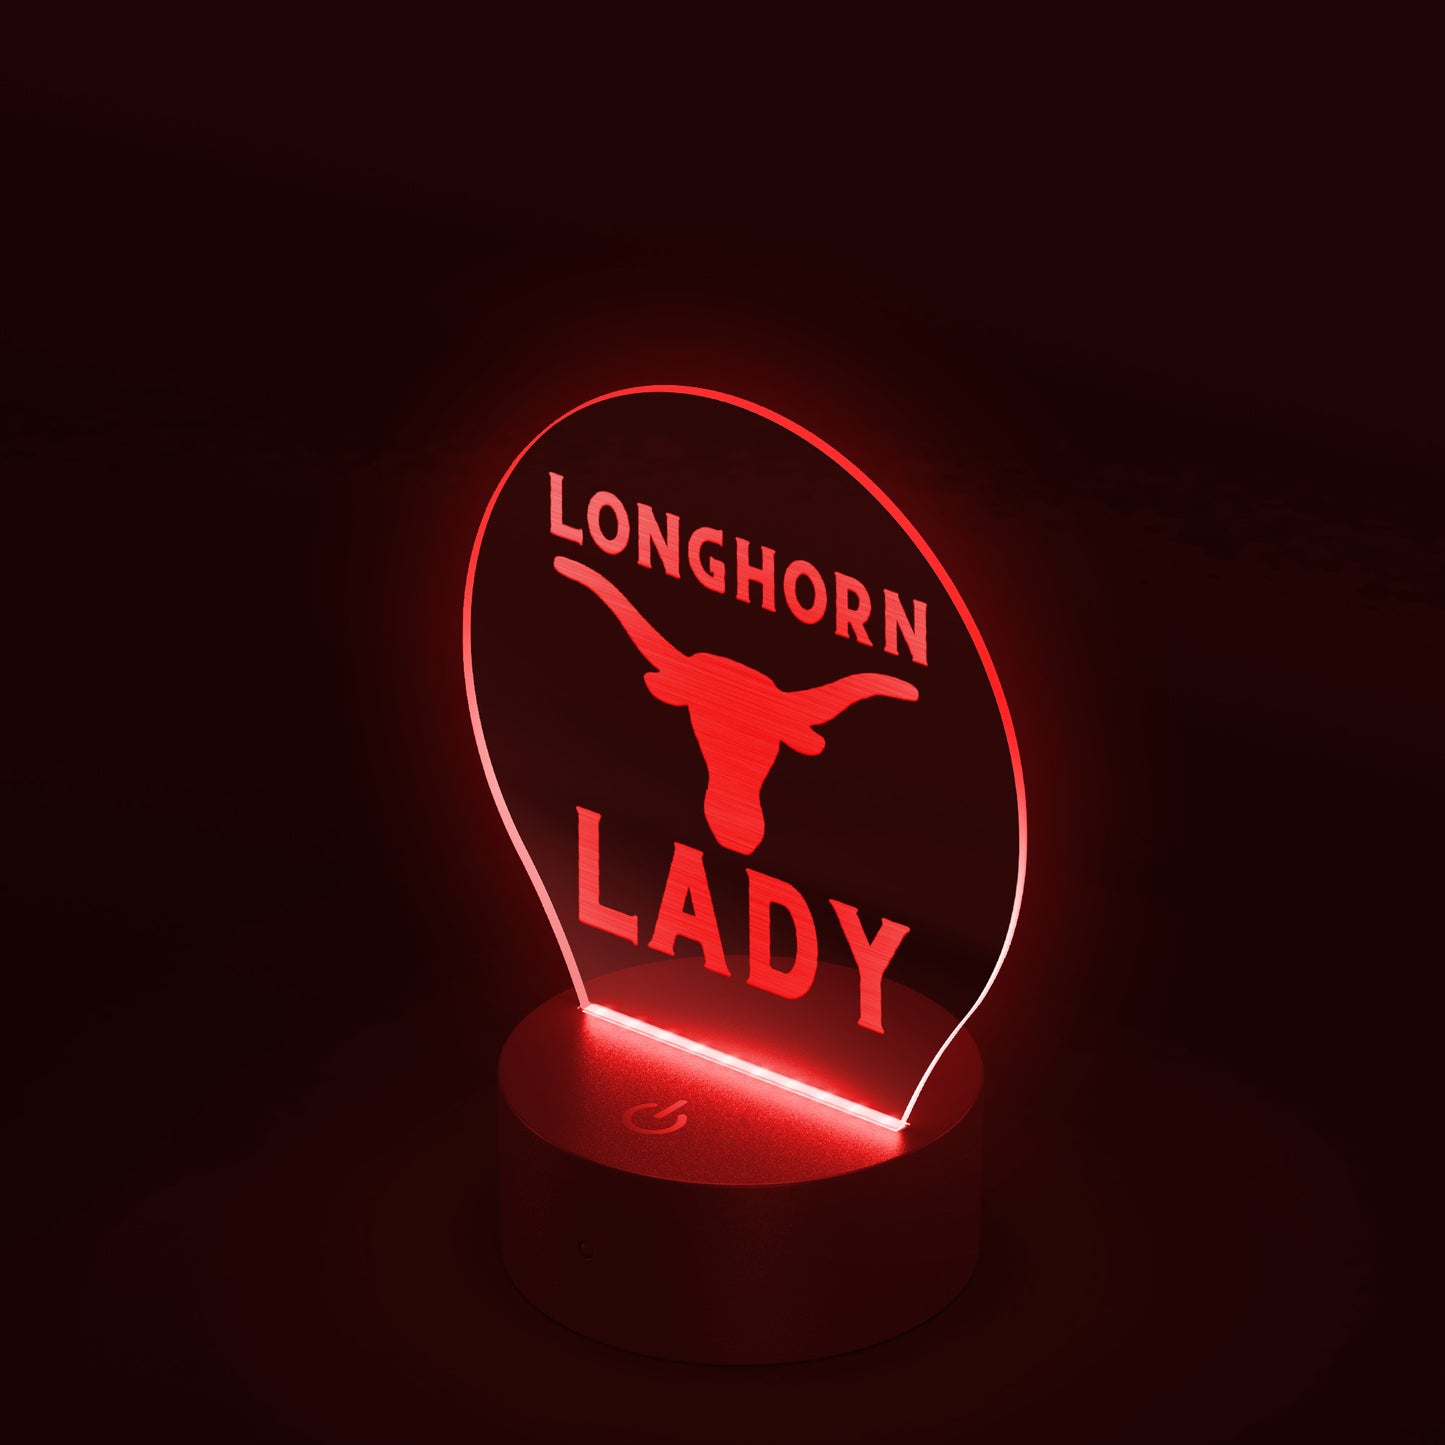 Longhorn Lady University Acrylic LED Table Light